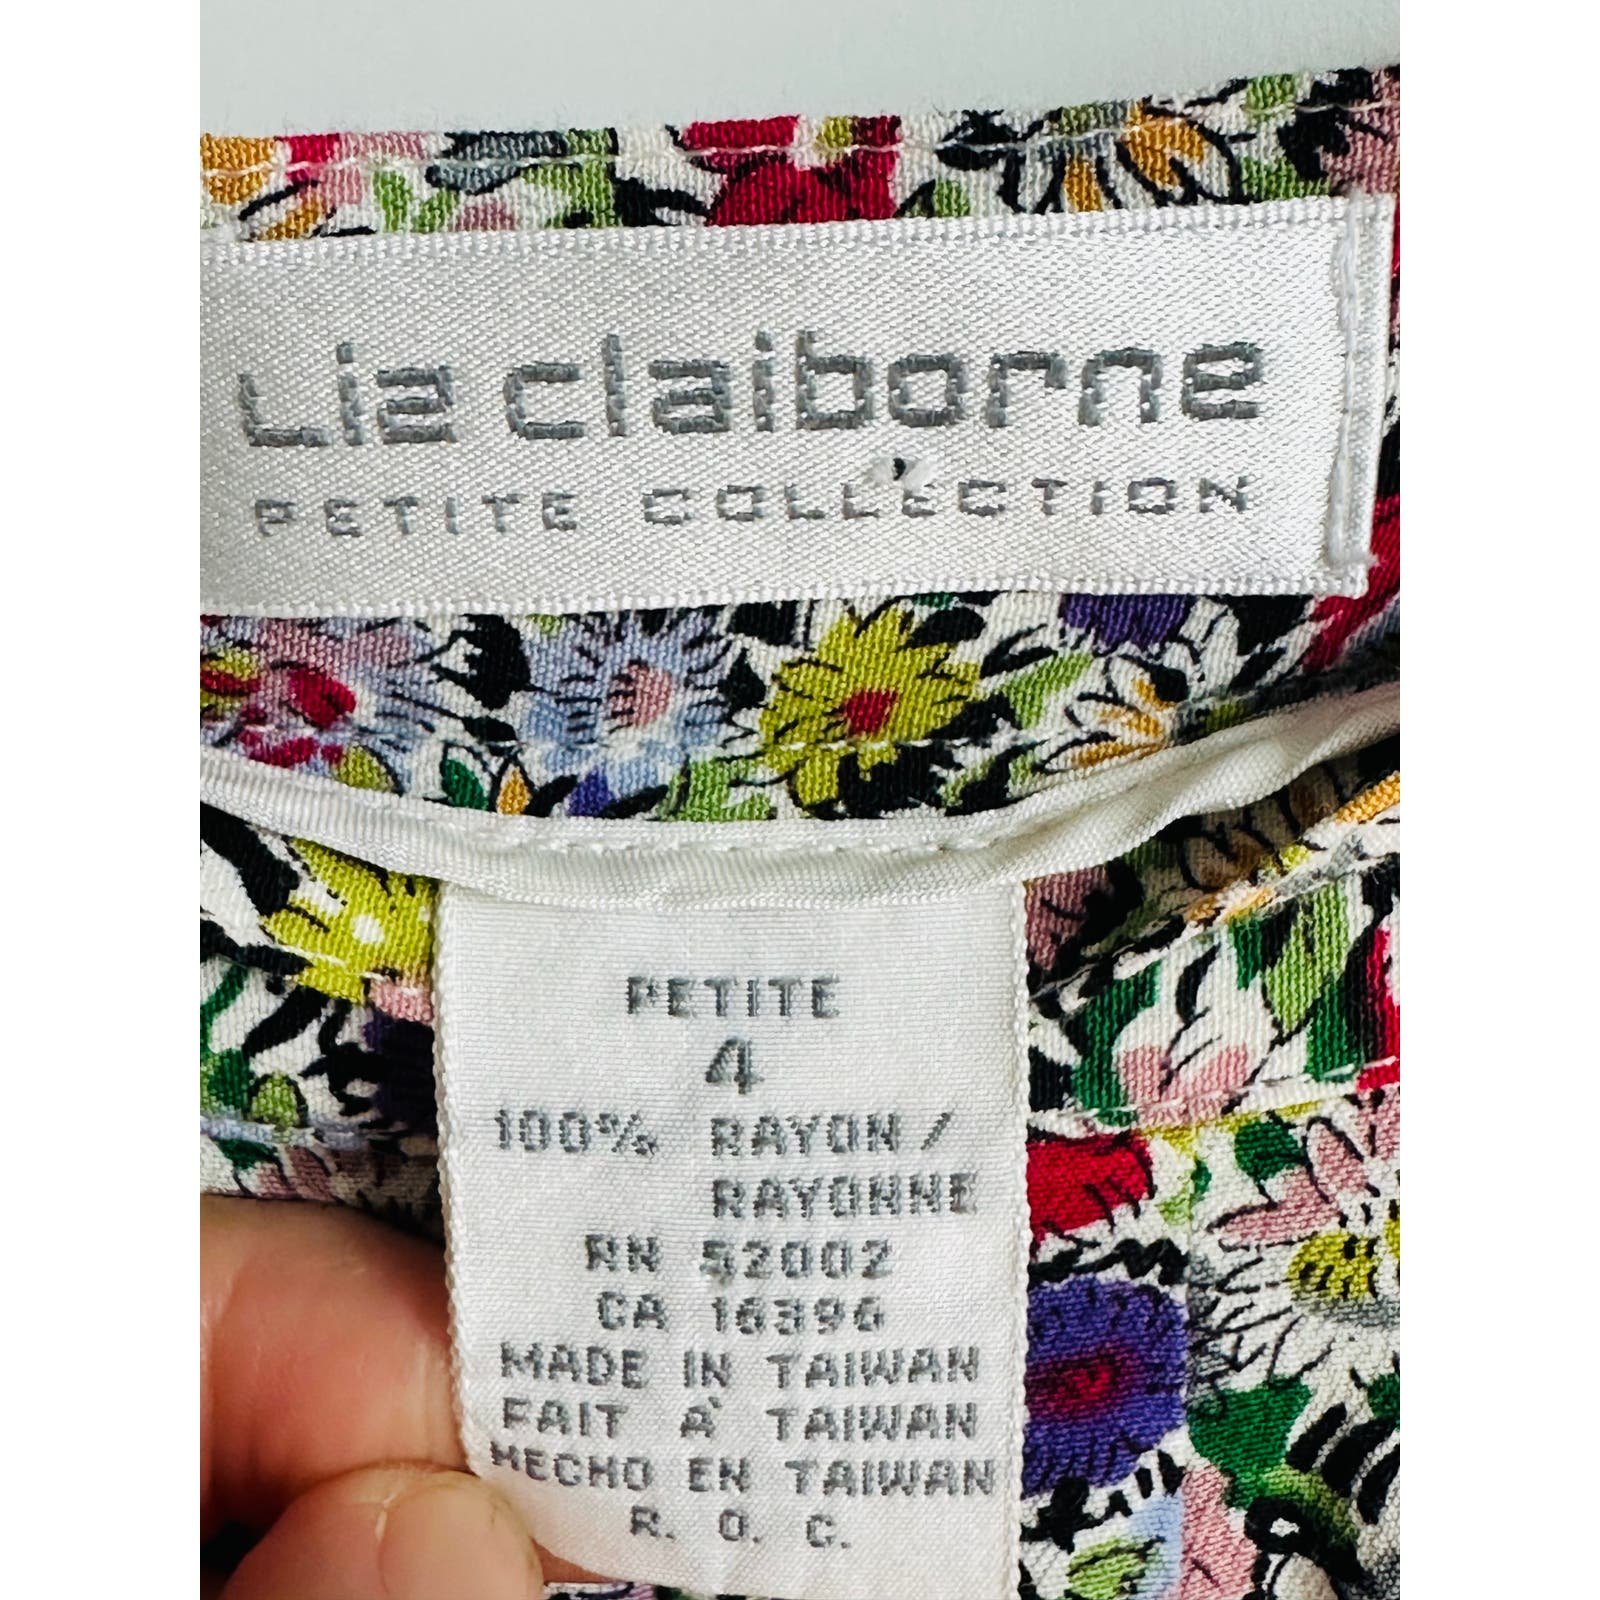 High quality Vintage 90s Liz Claiborne Floral print Knee Length Skirt Pockets Spring OamhXGXMC just for you